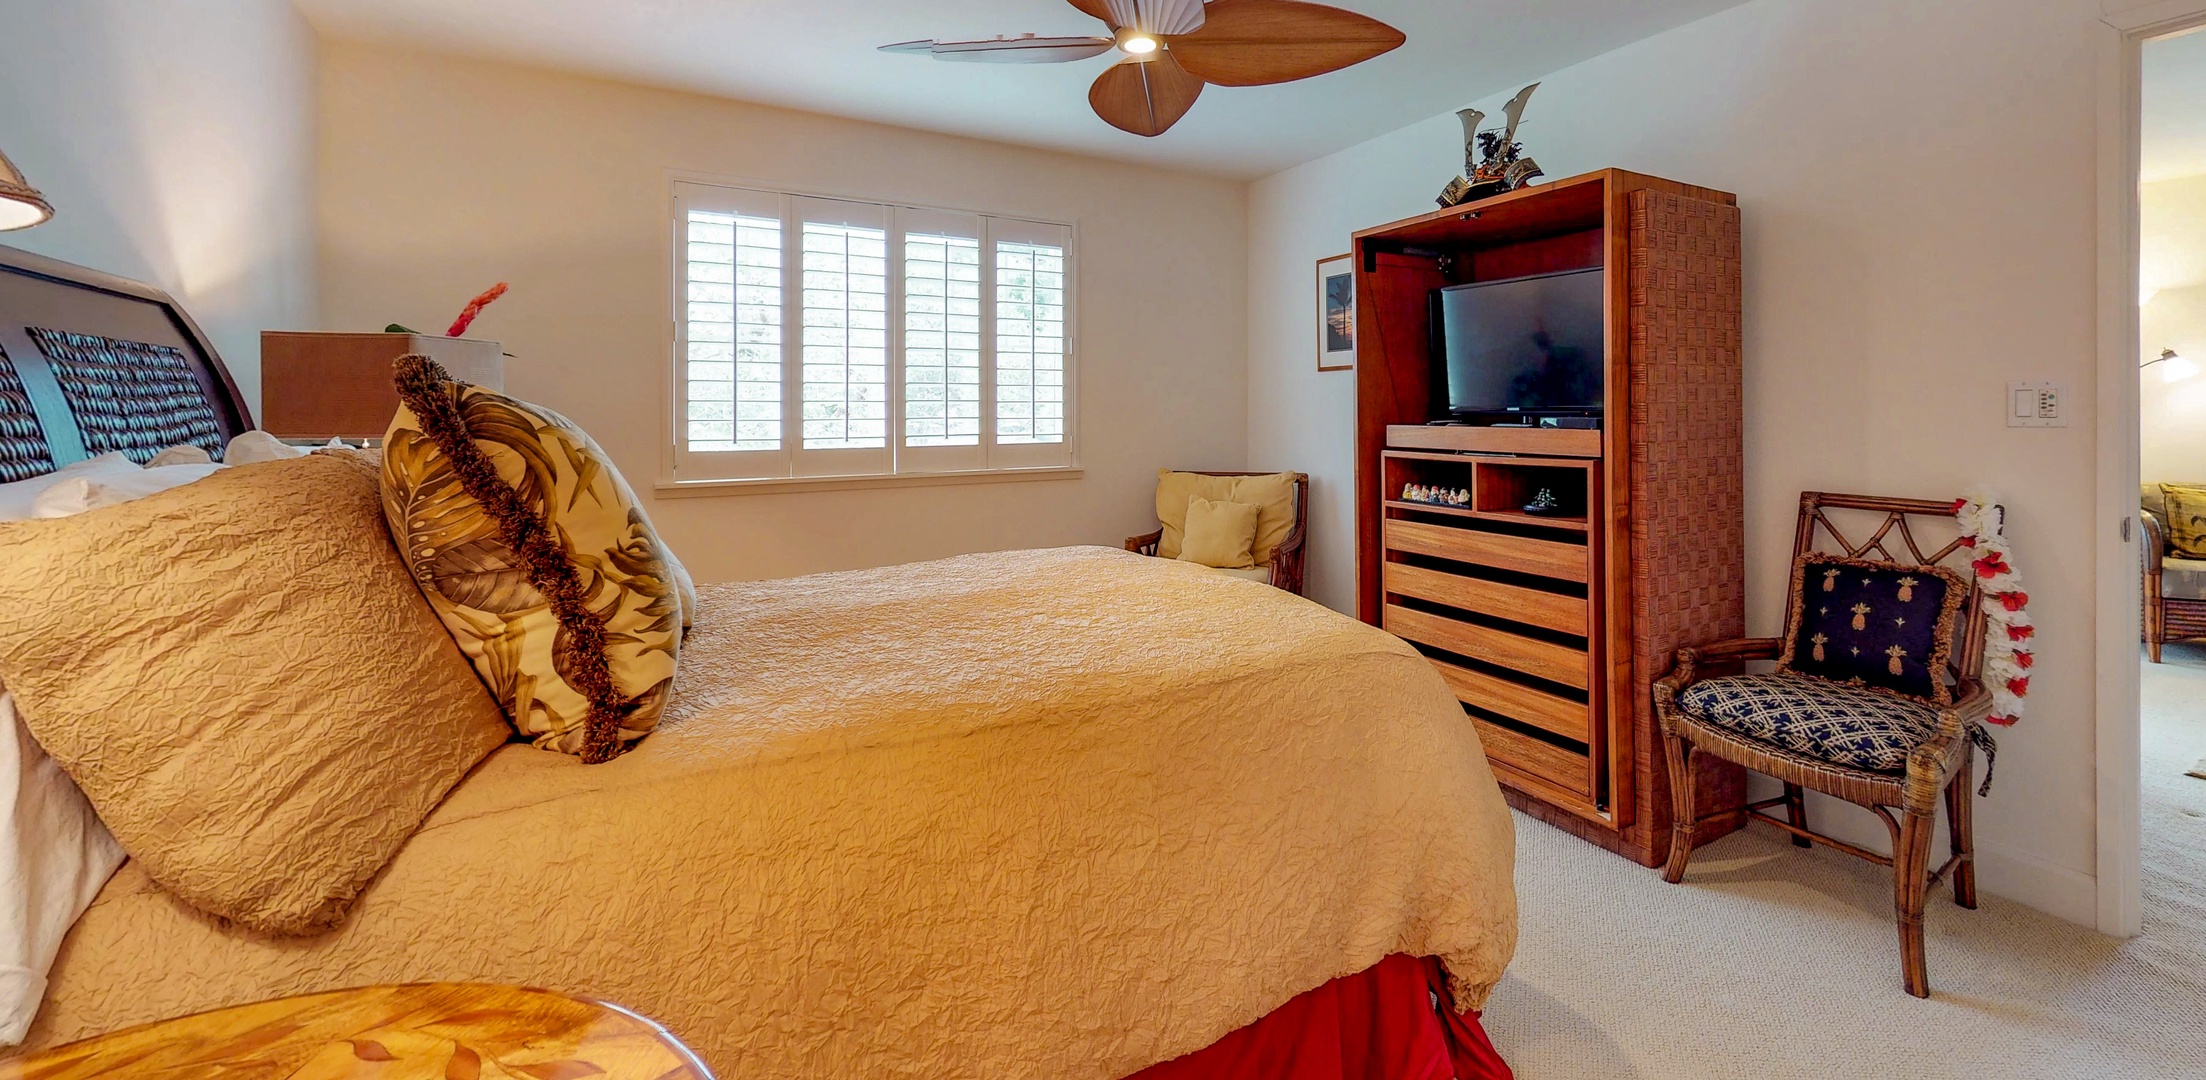 Kapolei Vacation Rentals, Ko Olina Kai 1105E - Bedroom with large bed, TV and reading nook.